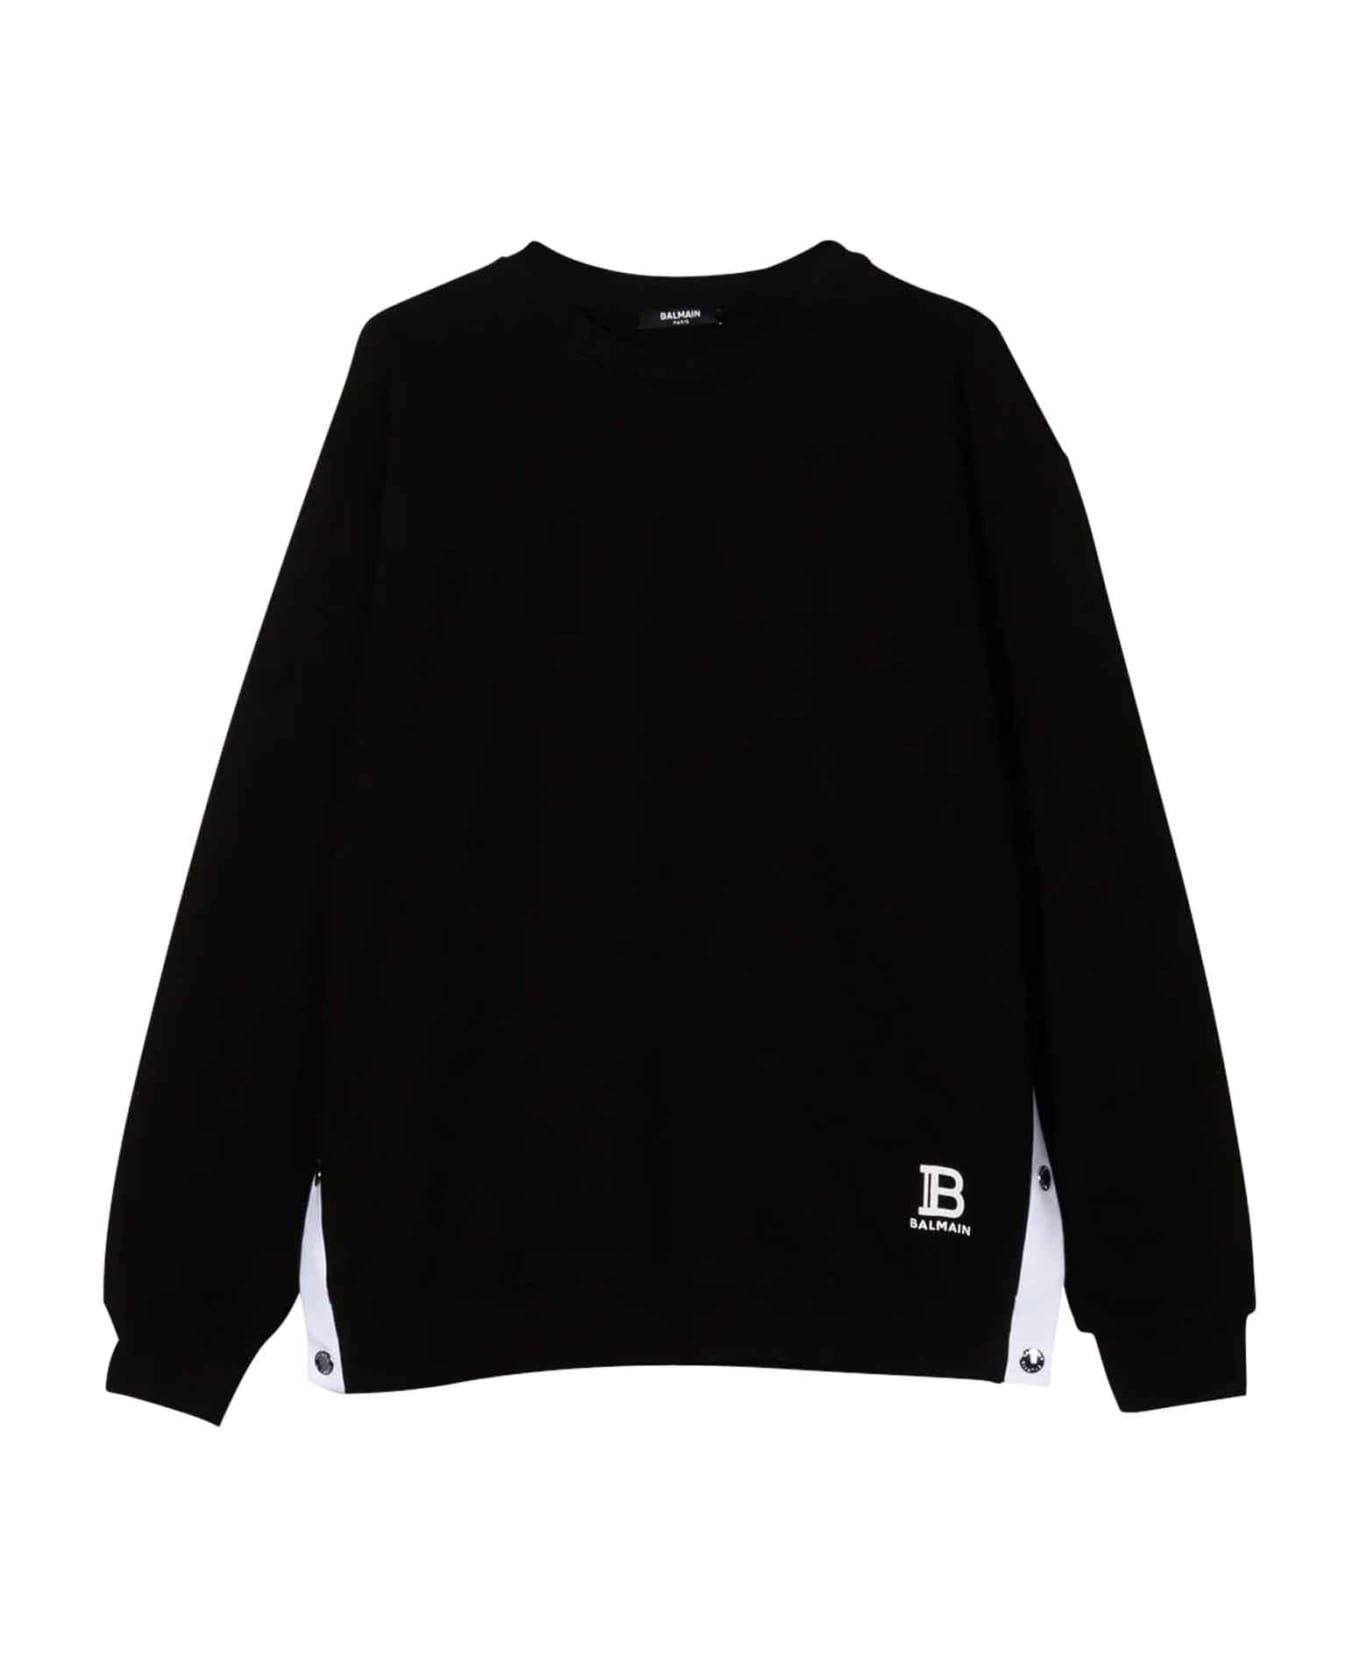 Balmain Black Sweatshirt Teen Unisex - Nero